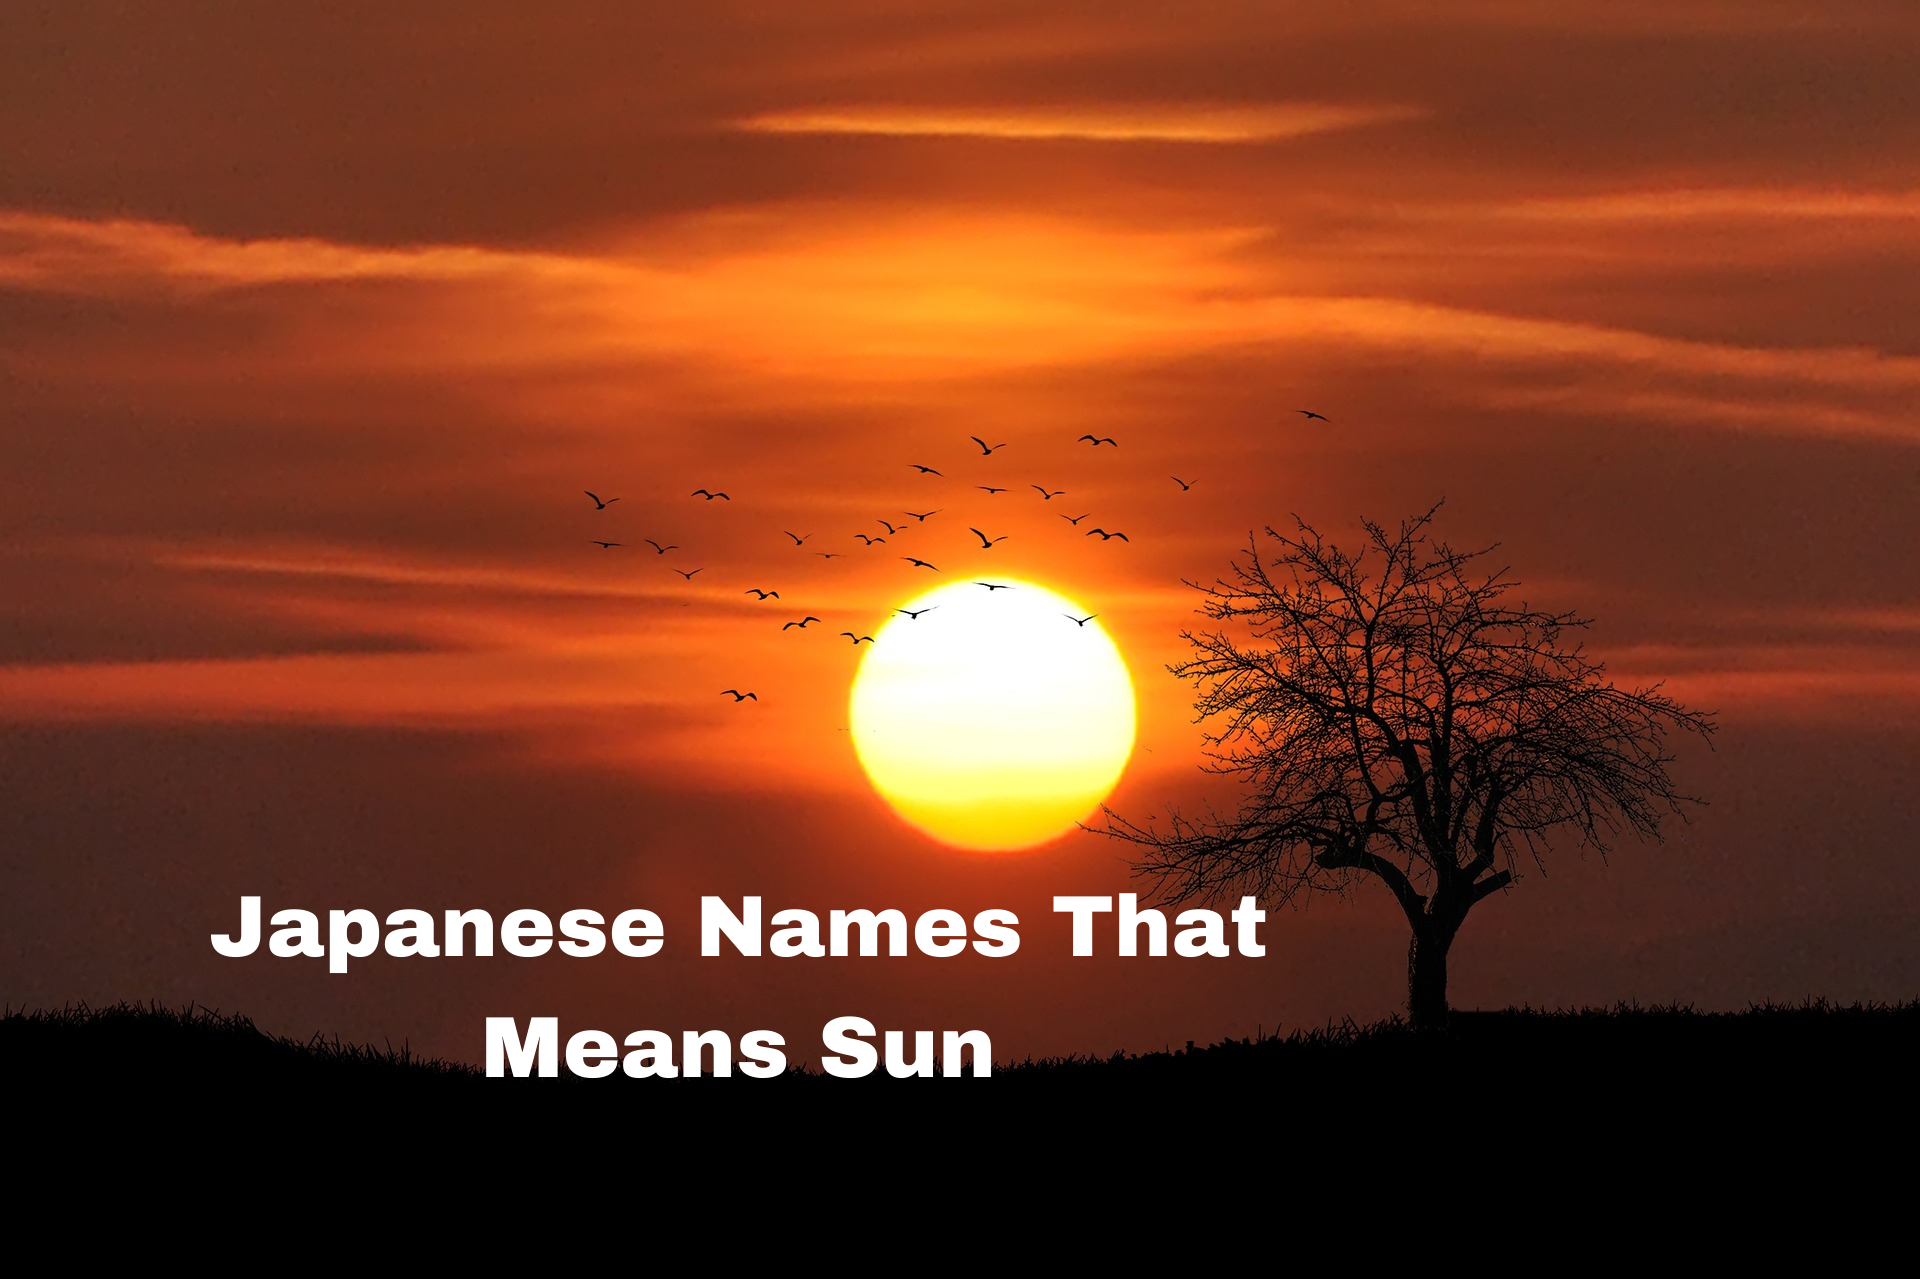 Japanese Names That Mean Sun